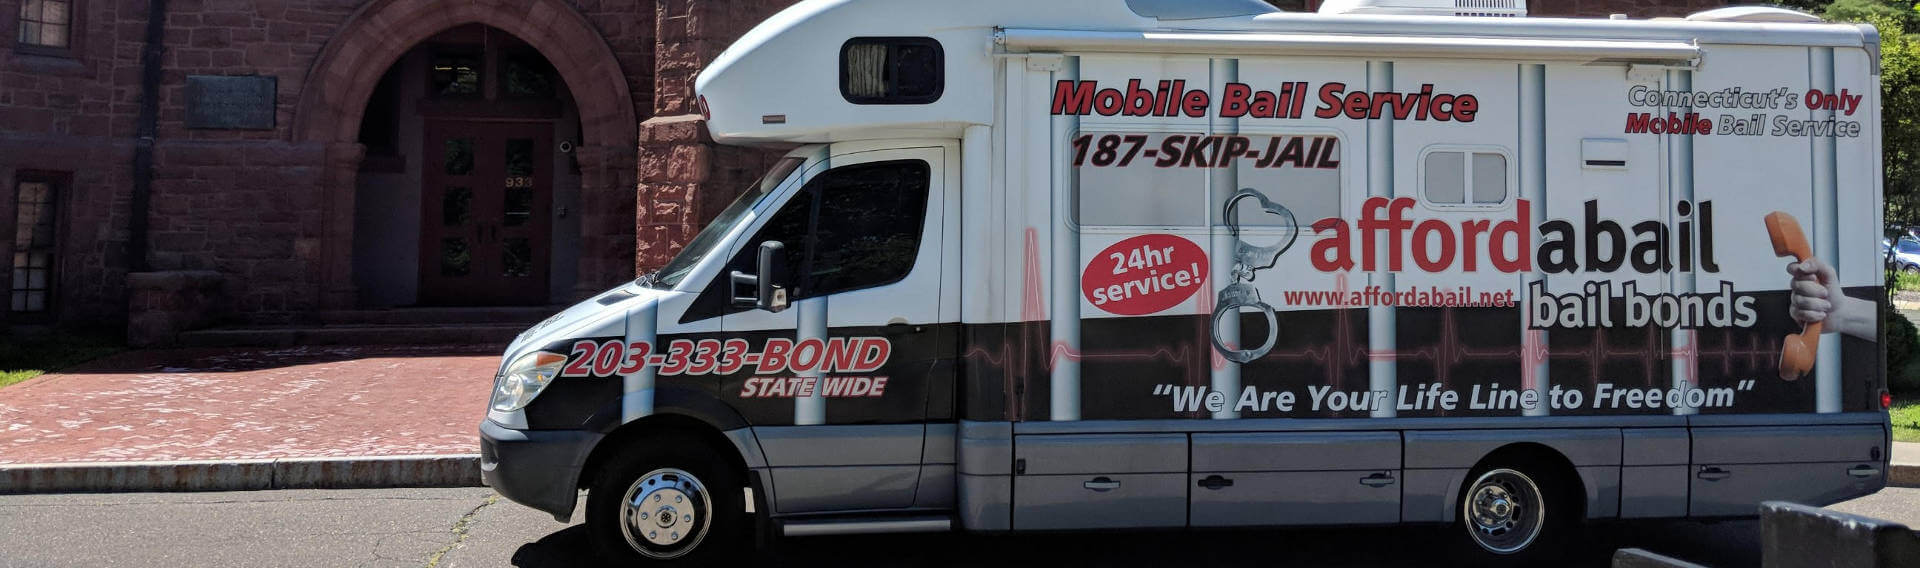 Mobile bail bonds service in Rocky Hill CT